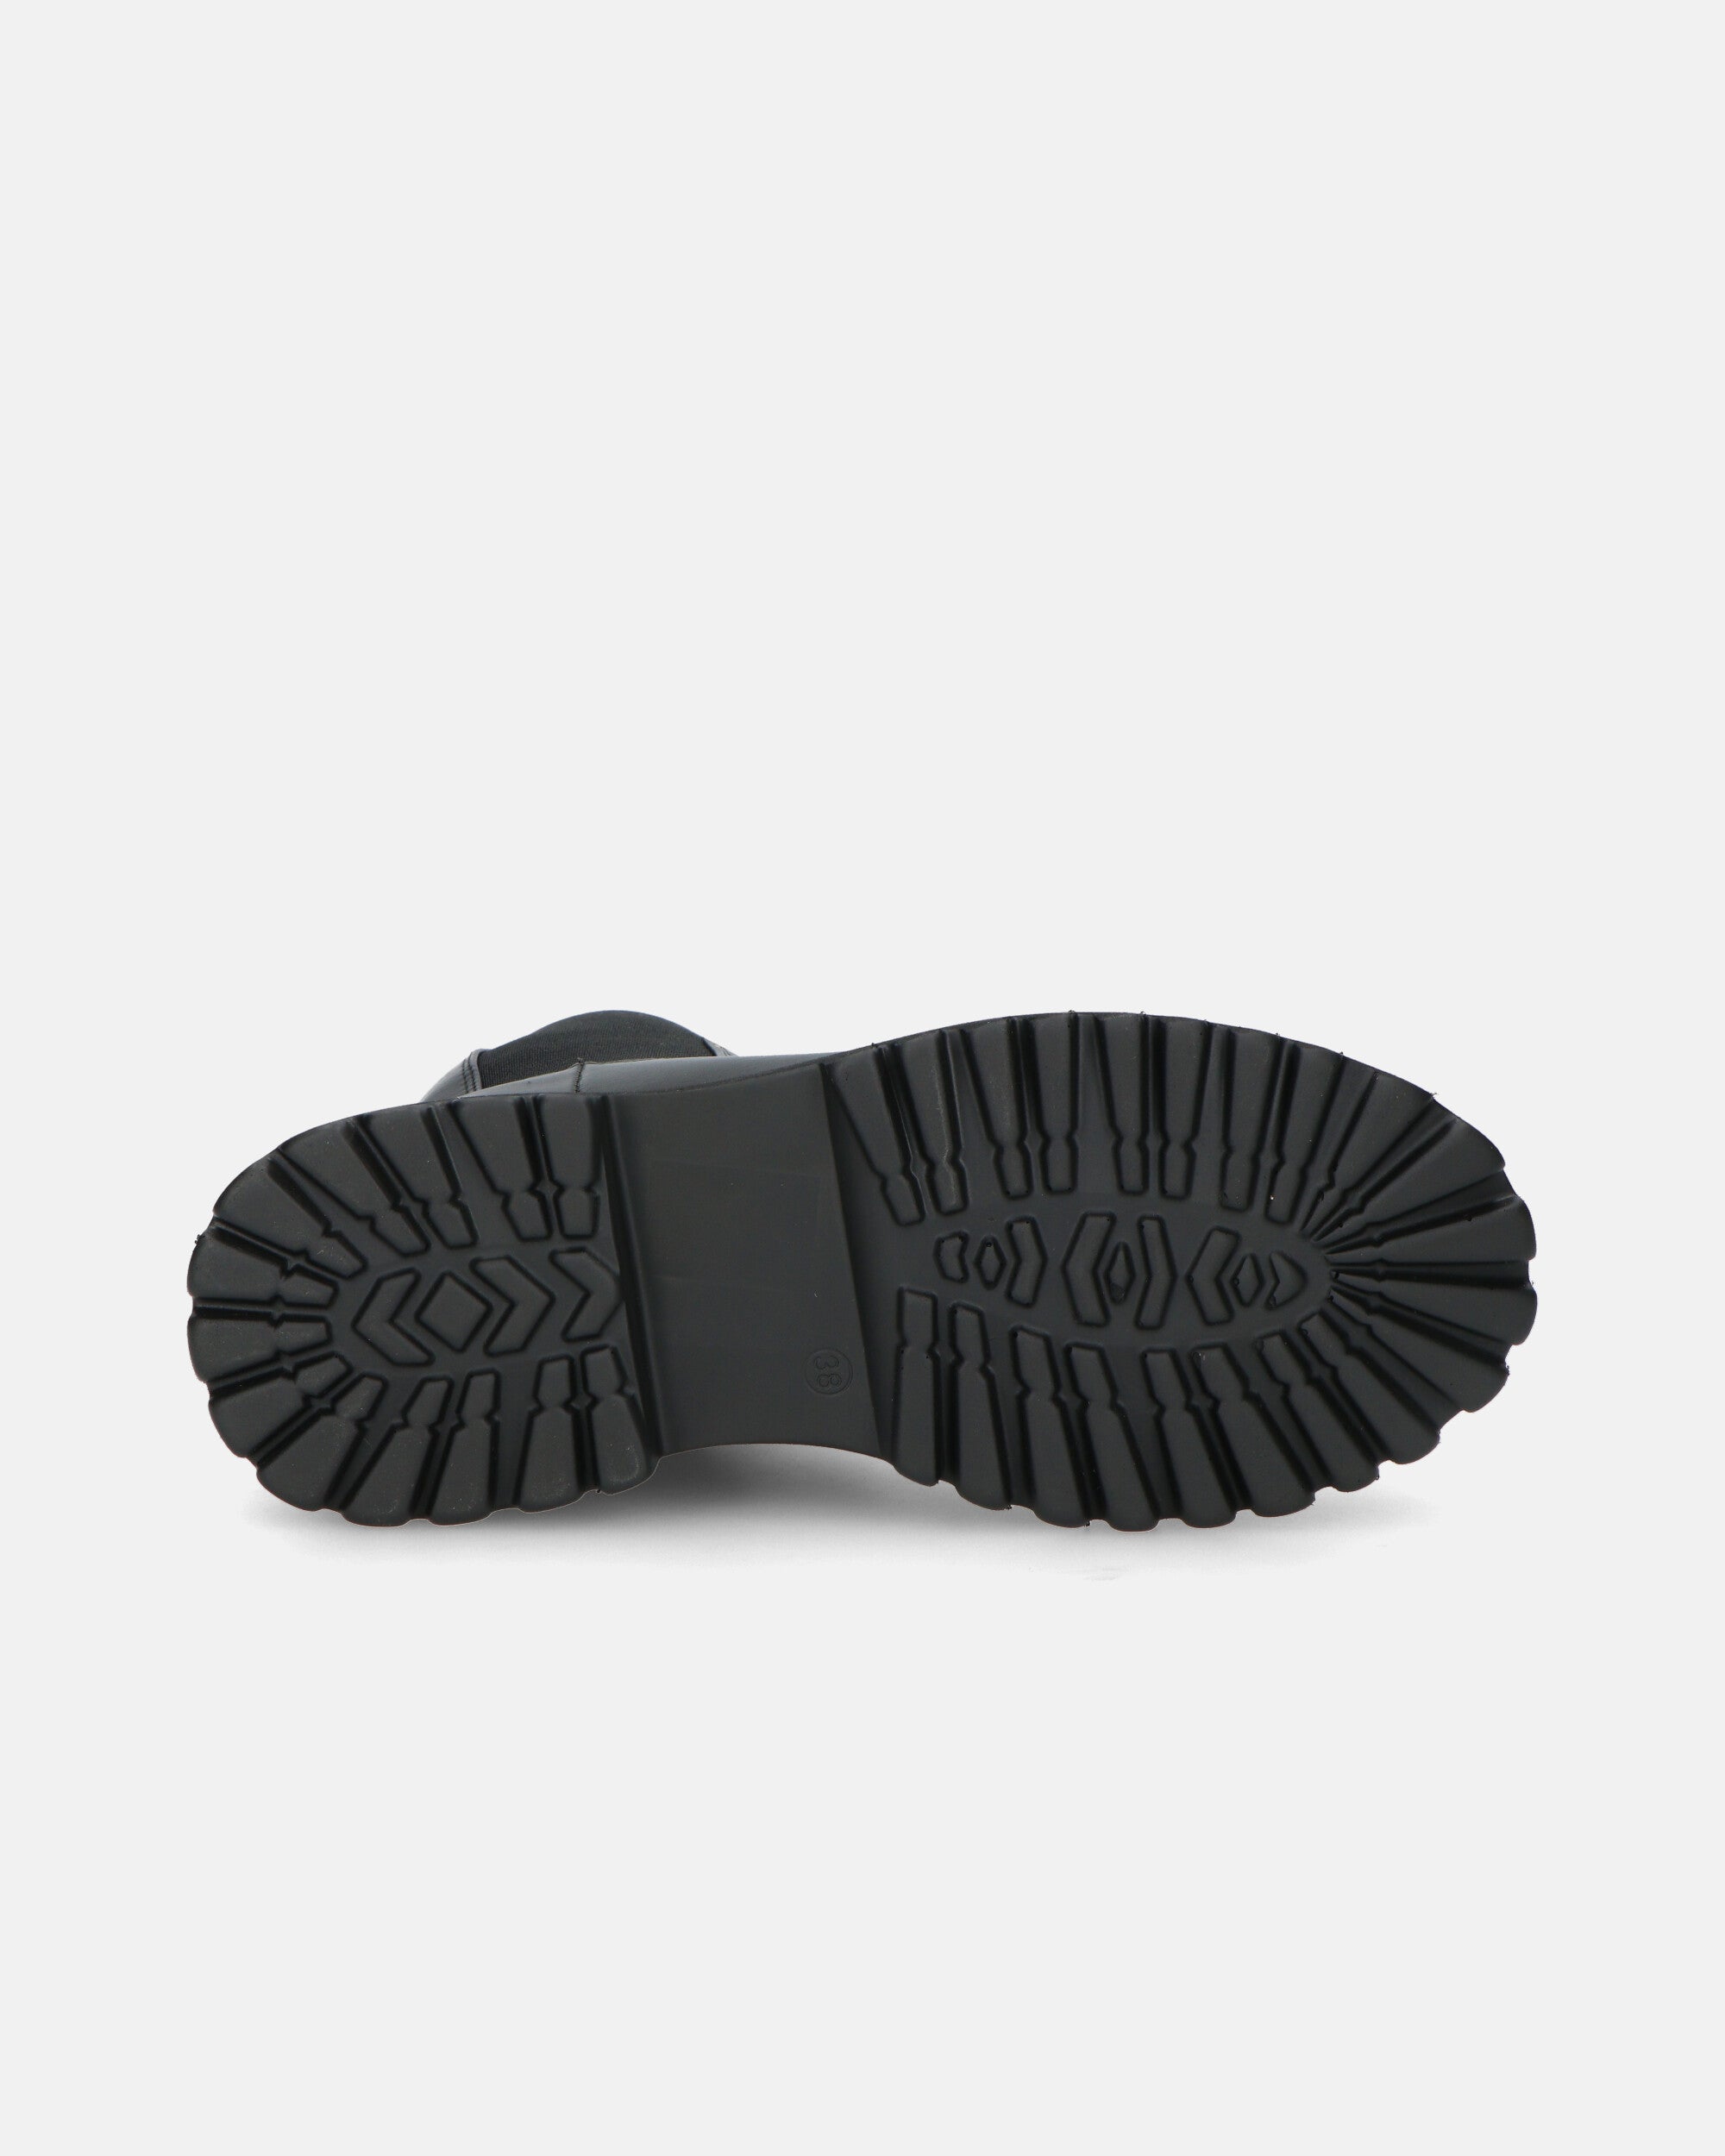 MINA - botines estilo anfibio negro con banda elástica